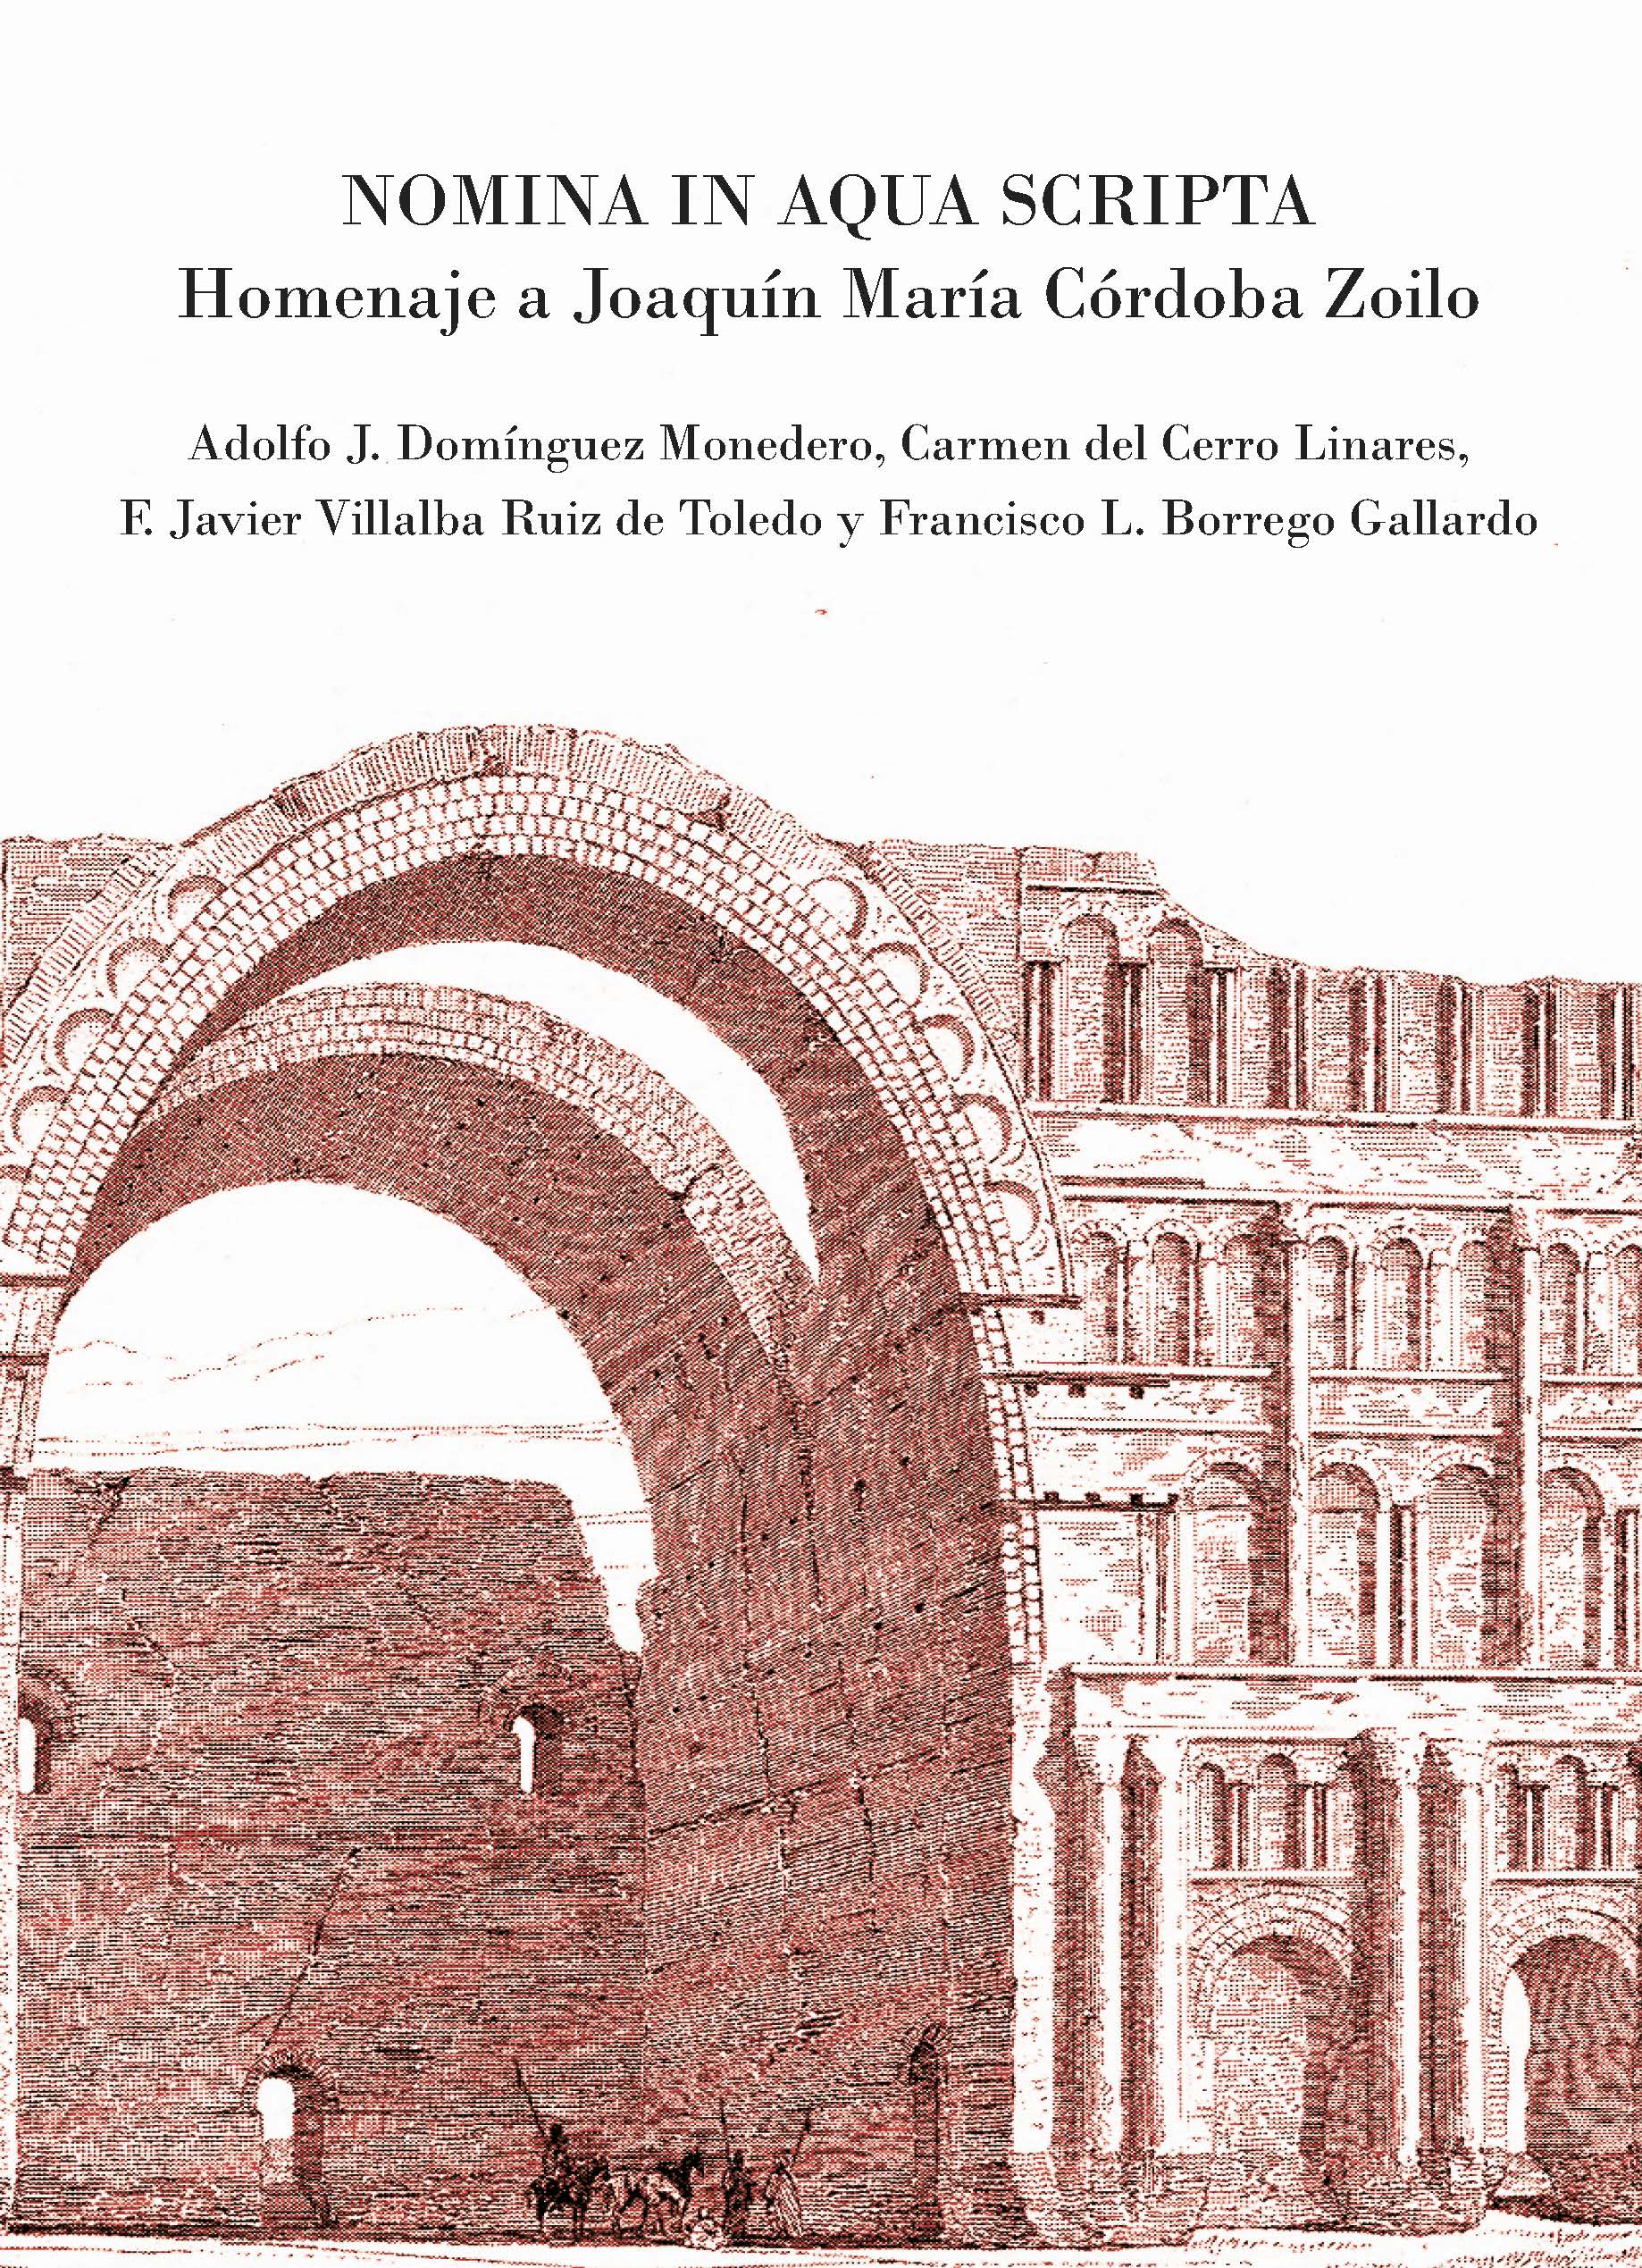 Imagen de portada del libro Nomina in aqua scripta